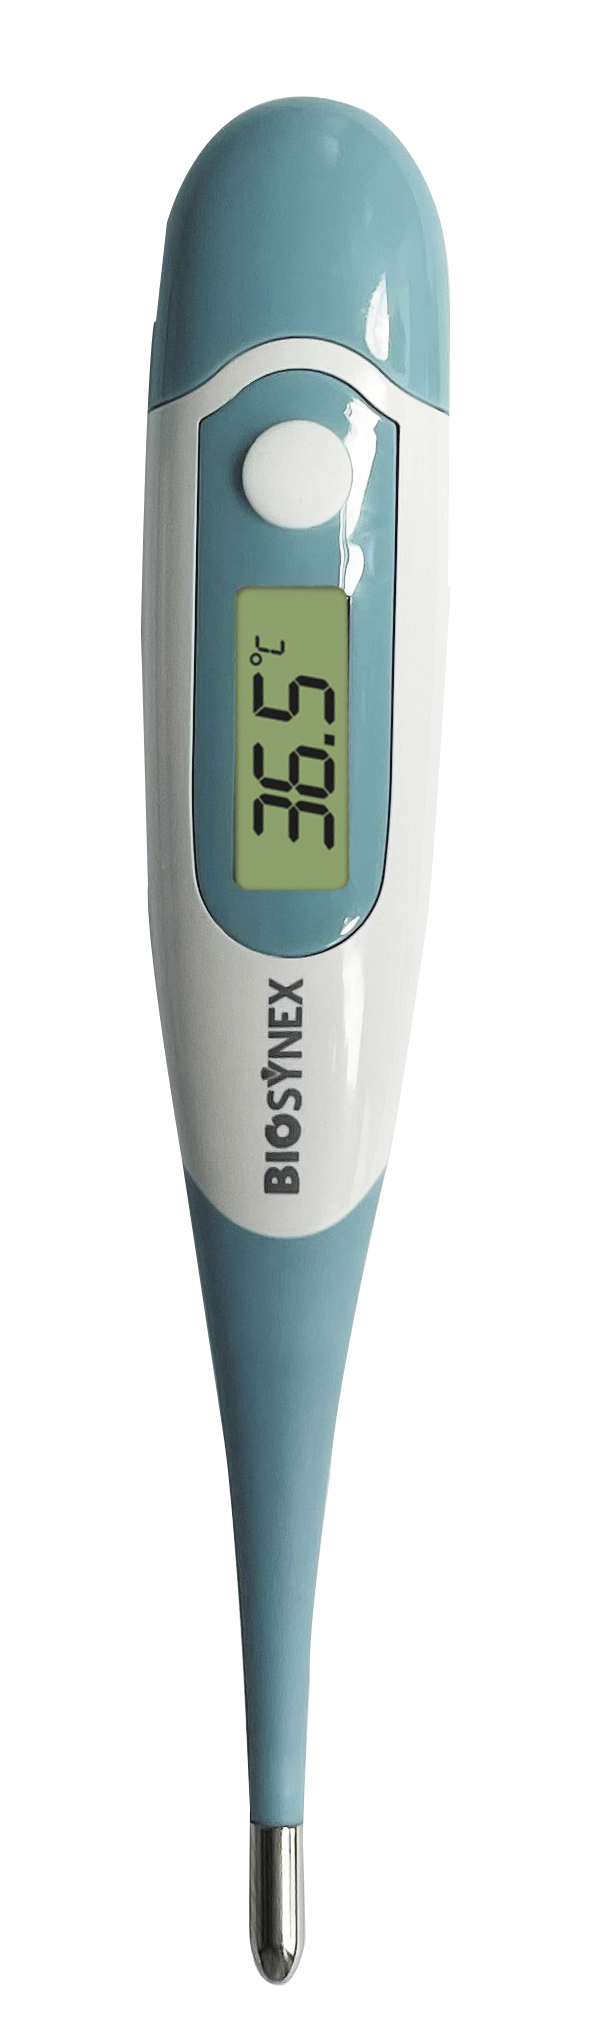 Thermomètre digital BIOSYNEX Exacto sonde étanche et flexible